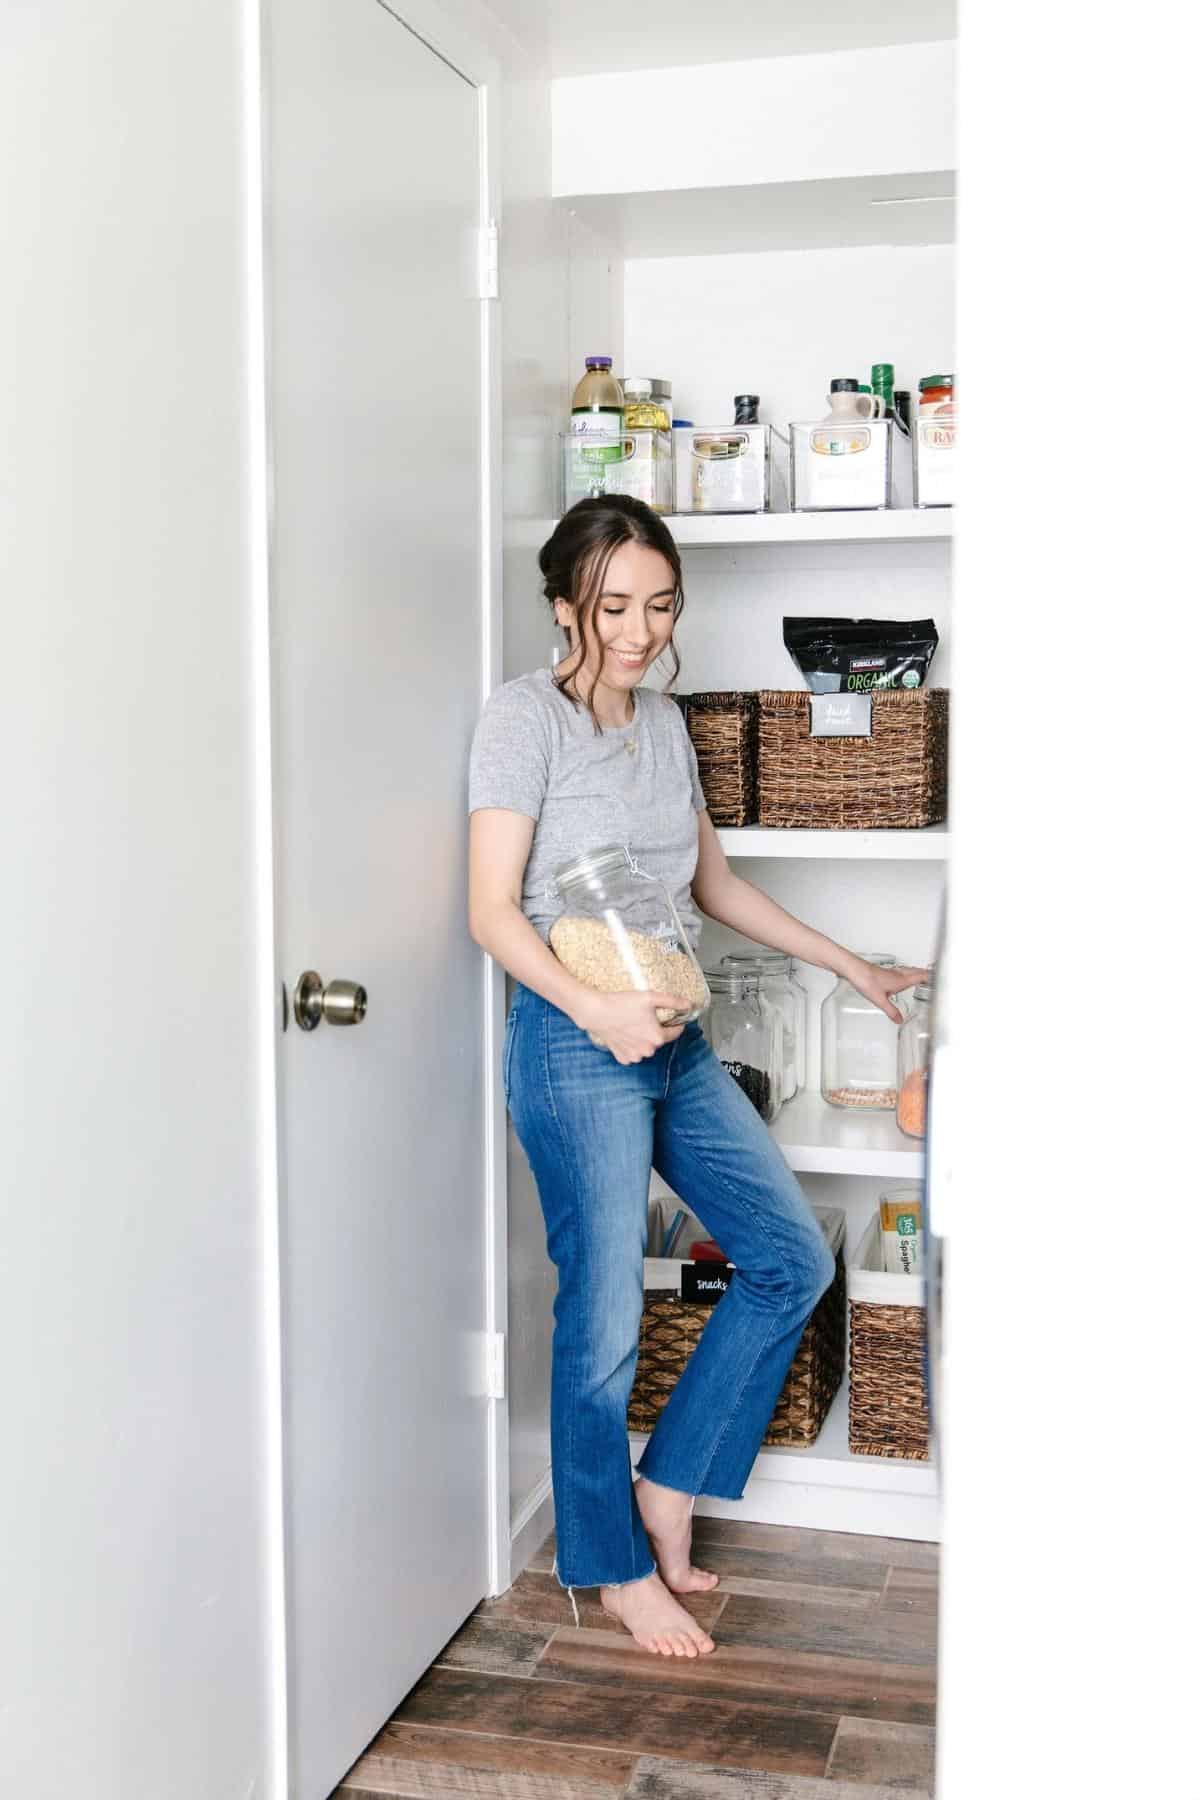 Nicolette in pantry holding glass bulk jar.